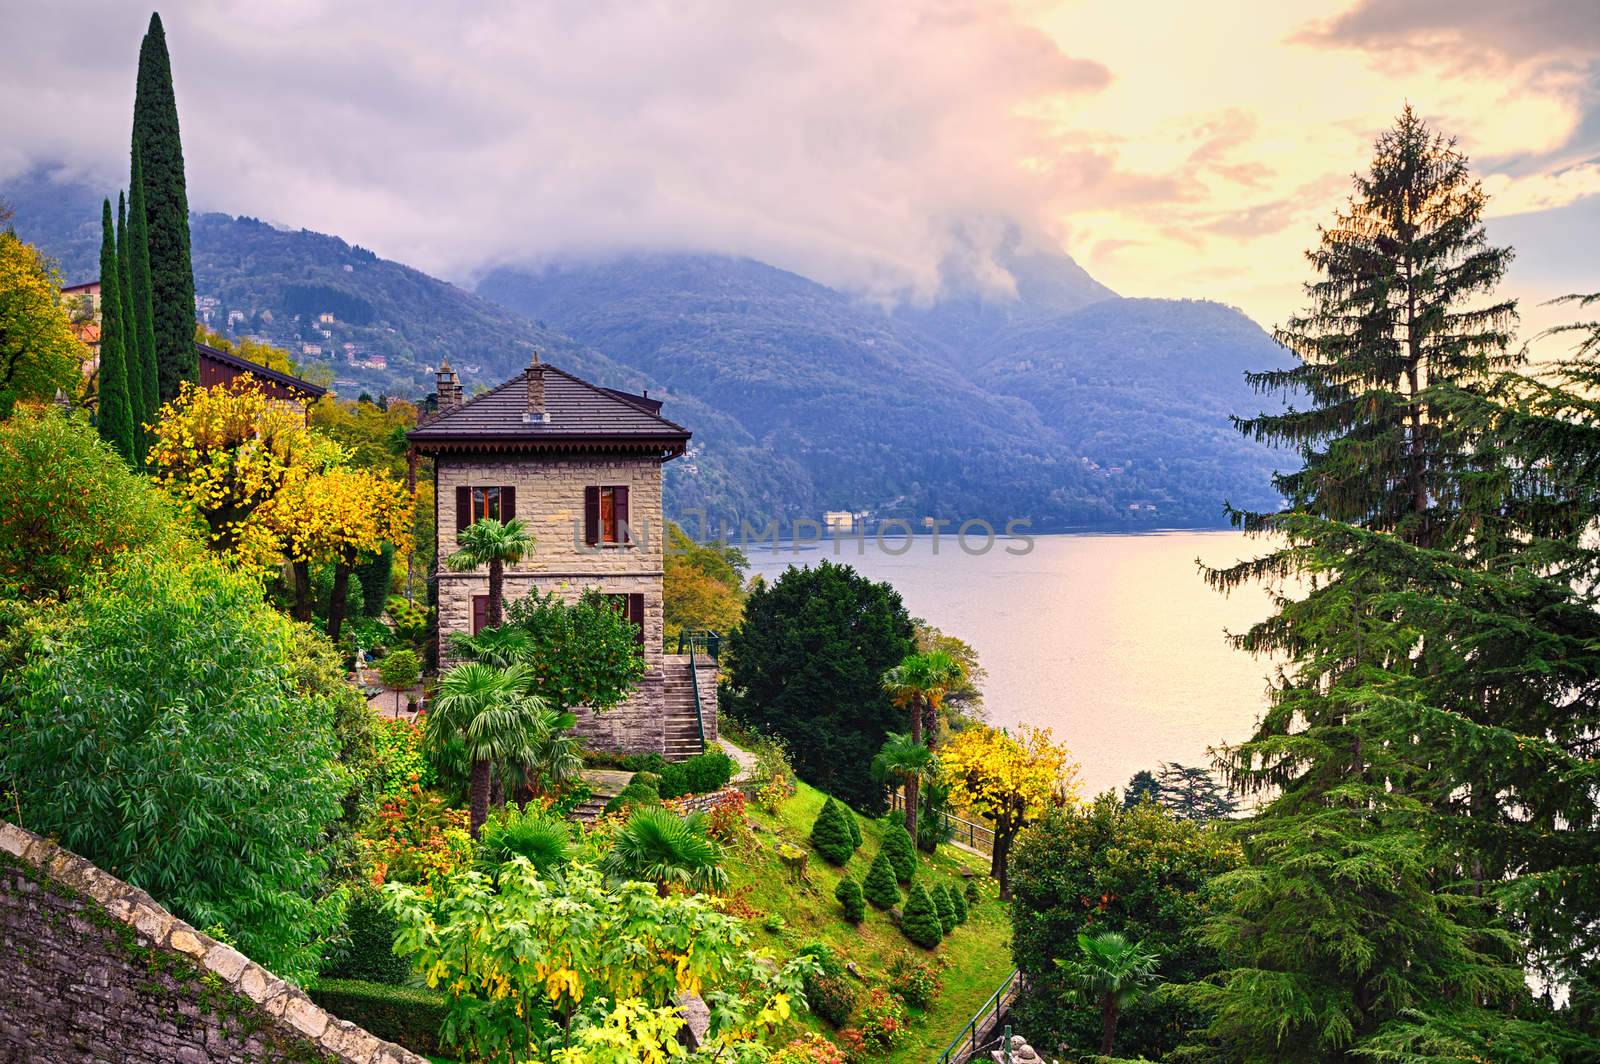 Luxury villa and garden on Como Lake by Milan, Italy  by GlobePhotos